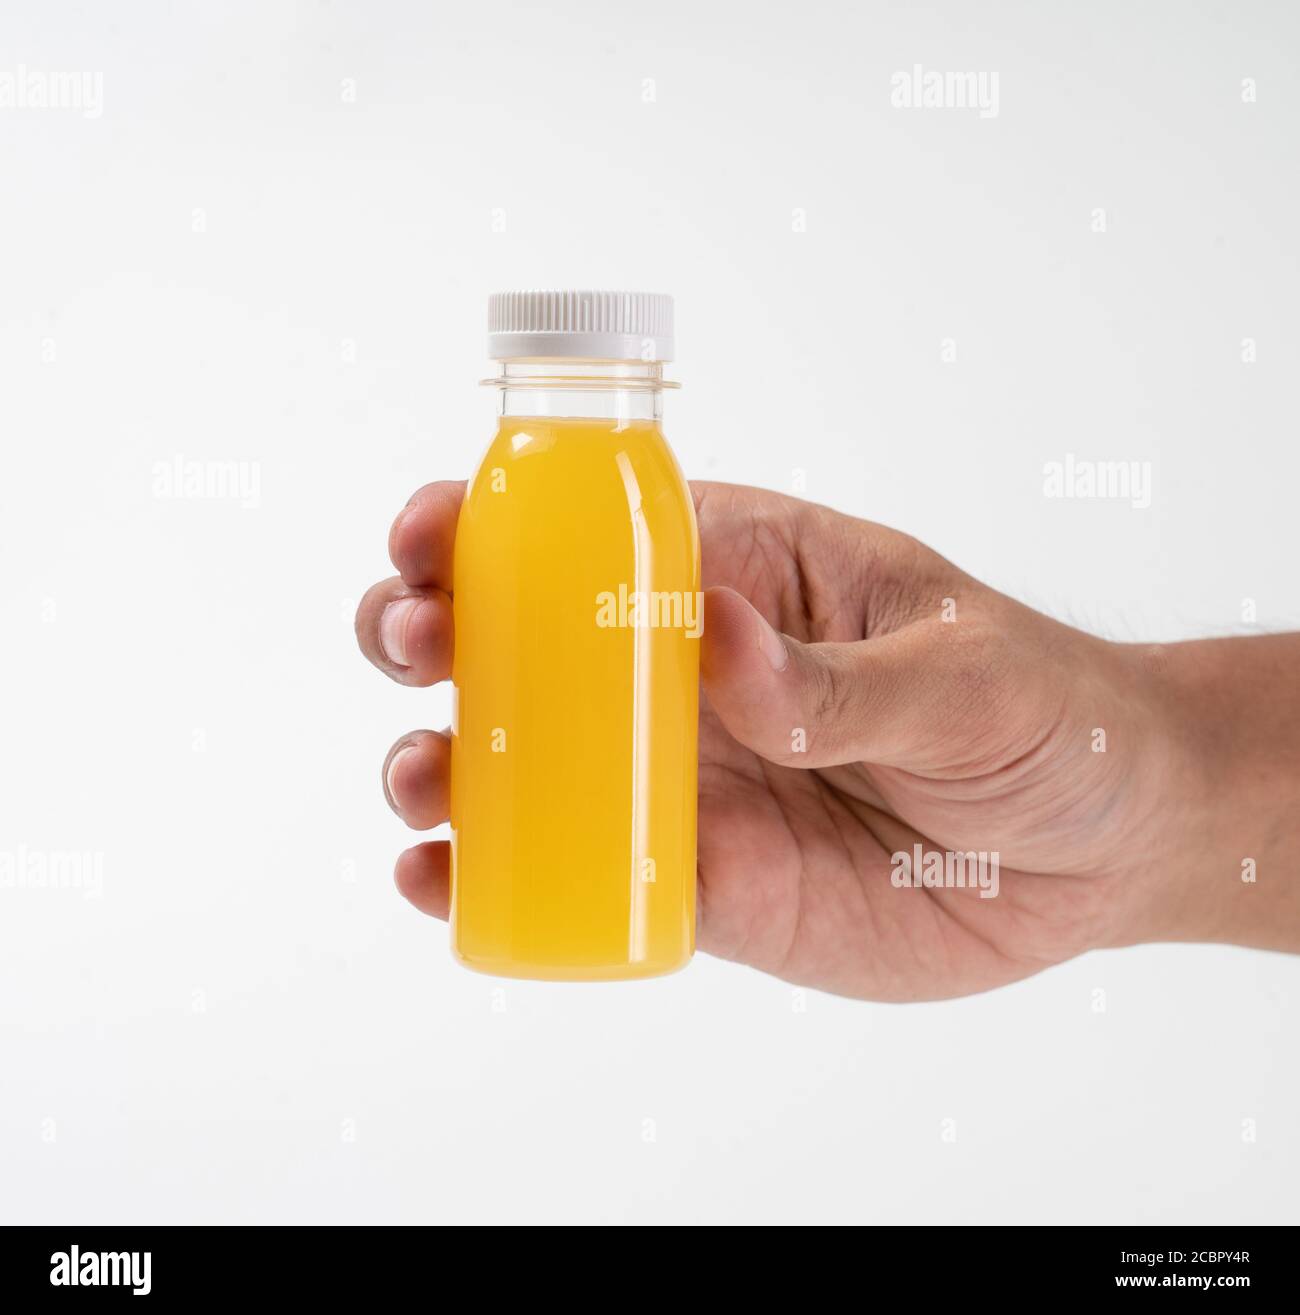 https://c8.alamy.com/comp/2CBPY4R/hand-holding-fruit-juice-on-a-plastic-bottle-product-mockup-2CBPY4R.jpg